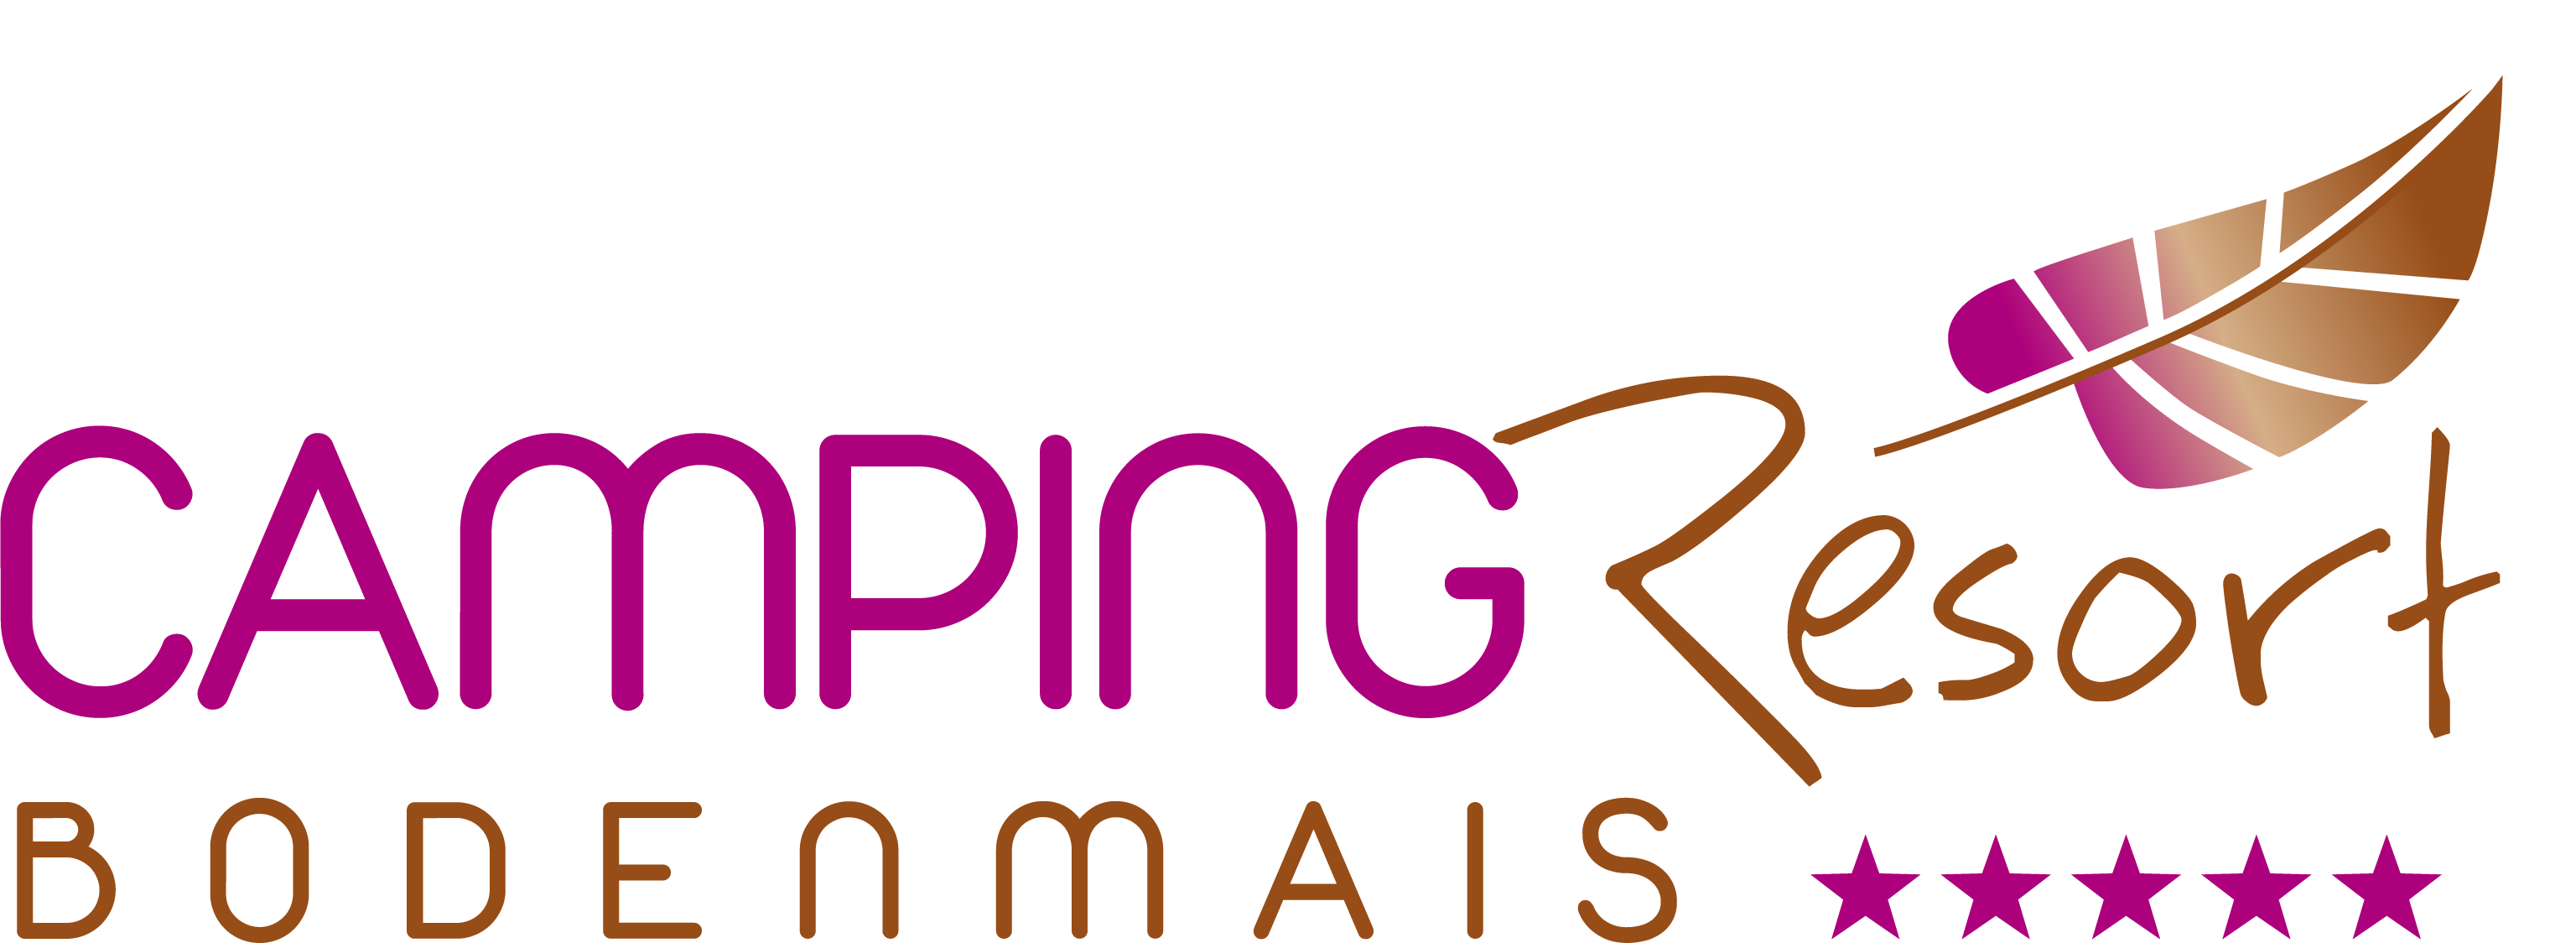 Logo_CampingResort_farbig.png